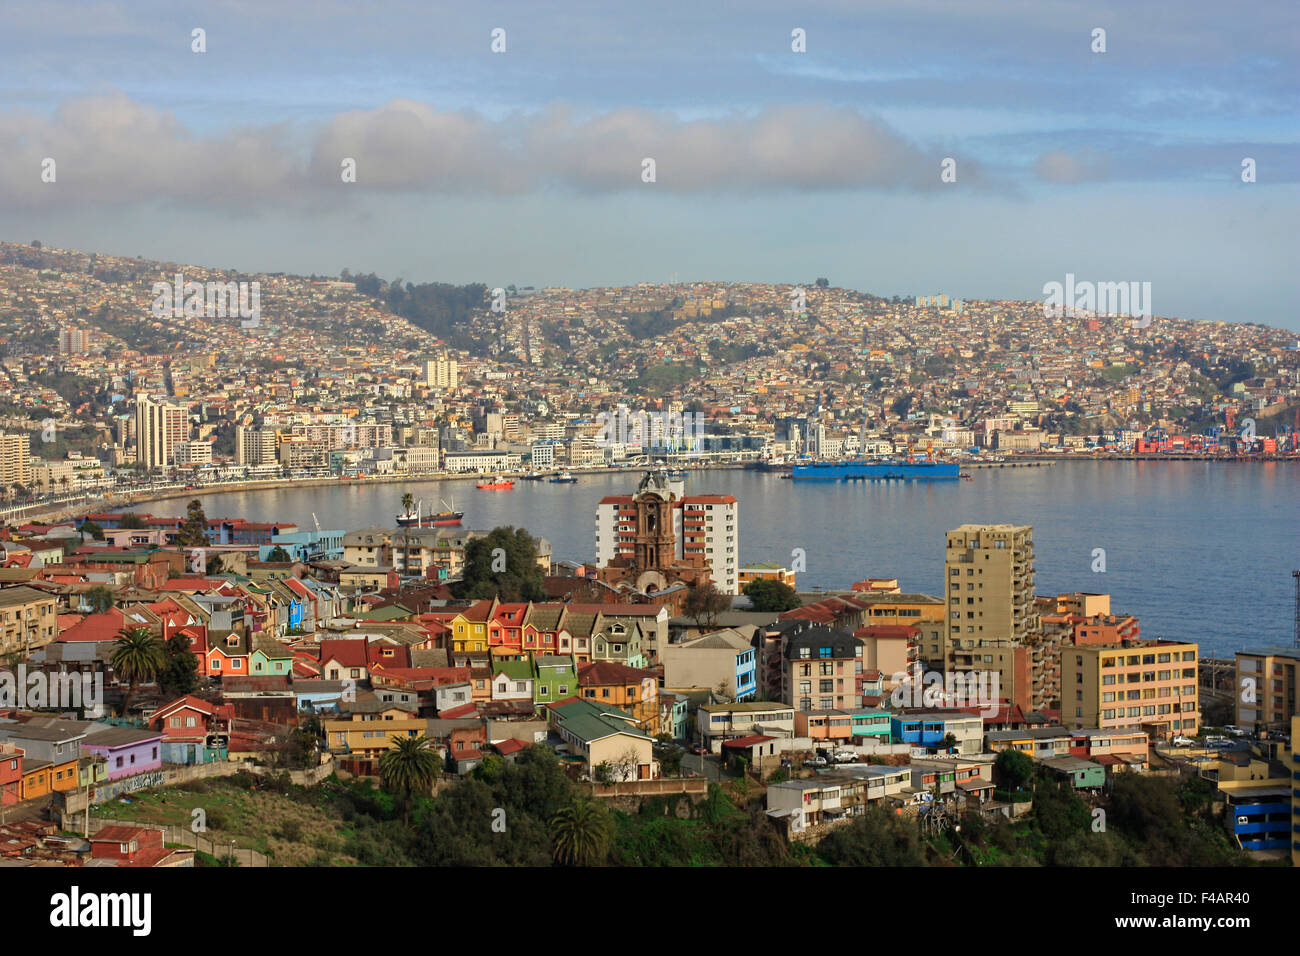 Valparaiso a shipping harbor in South America Stock Photo